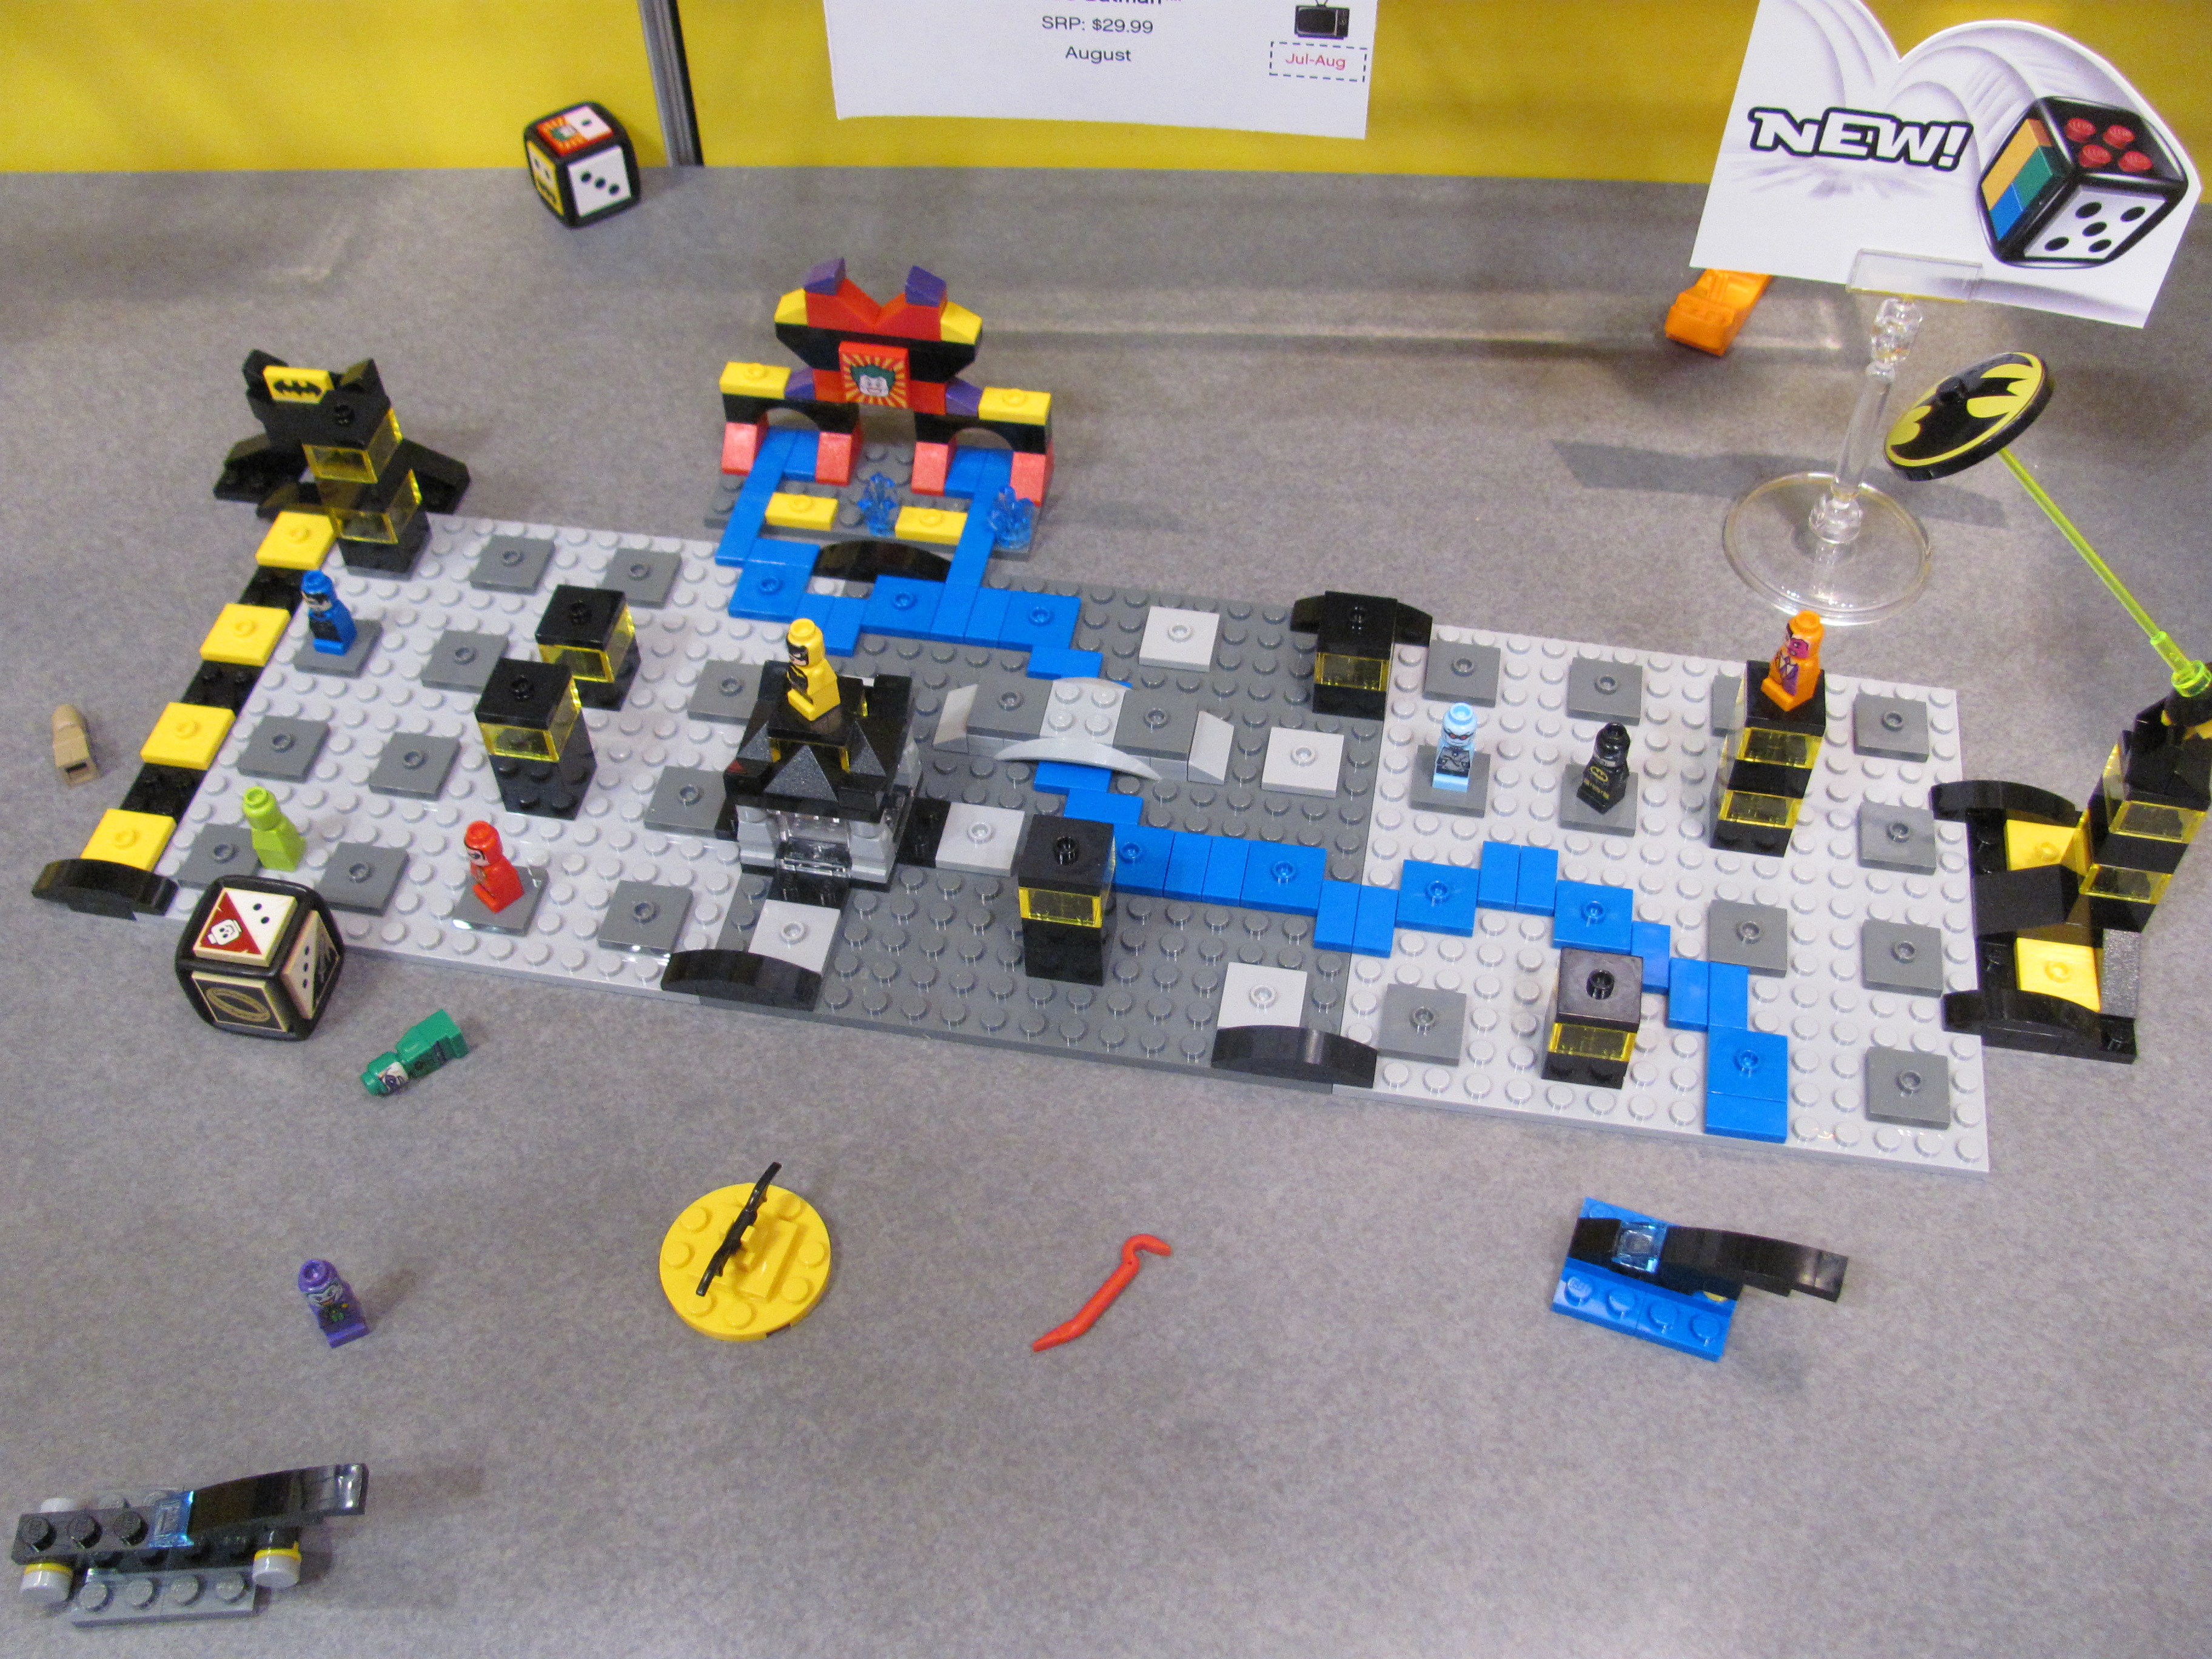 Where can you play LEGO Batman games?